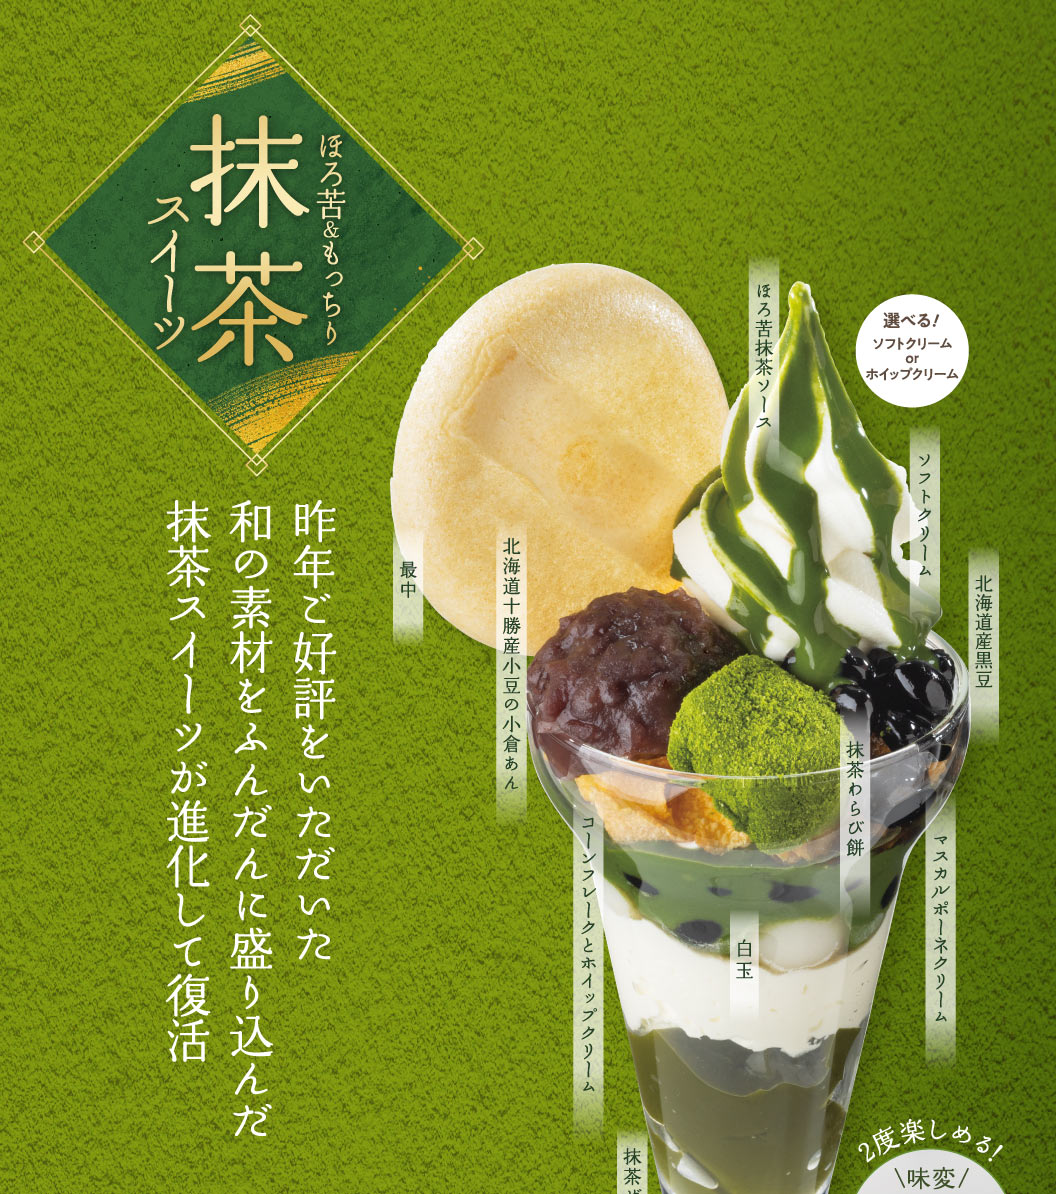 Enjoy a special maccya parfait with Japanese ingredients